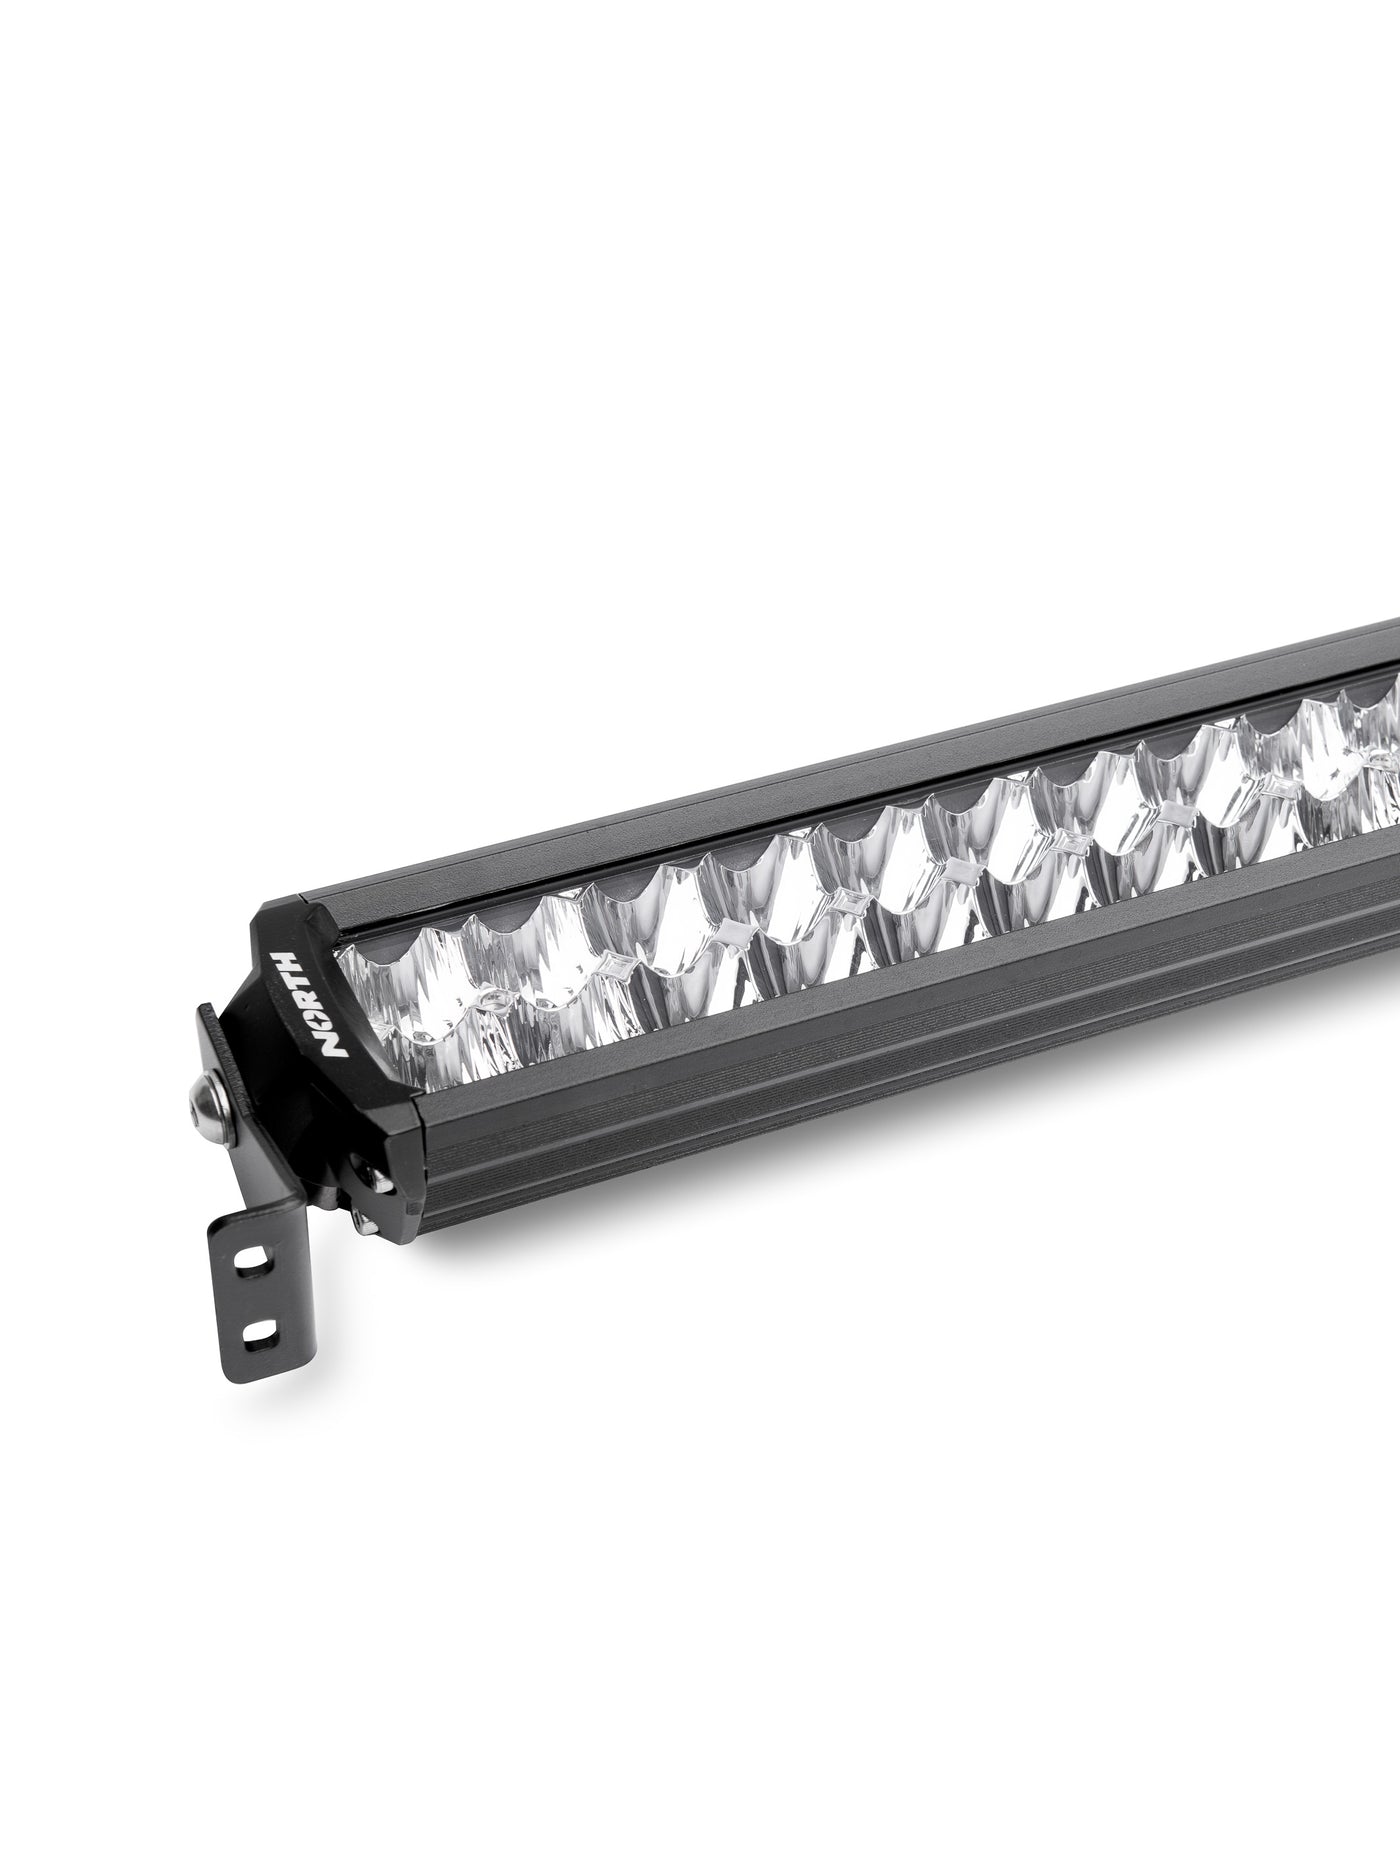 40" Dual Row LED Light bar sleek no-screw design - North Lights